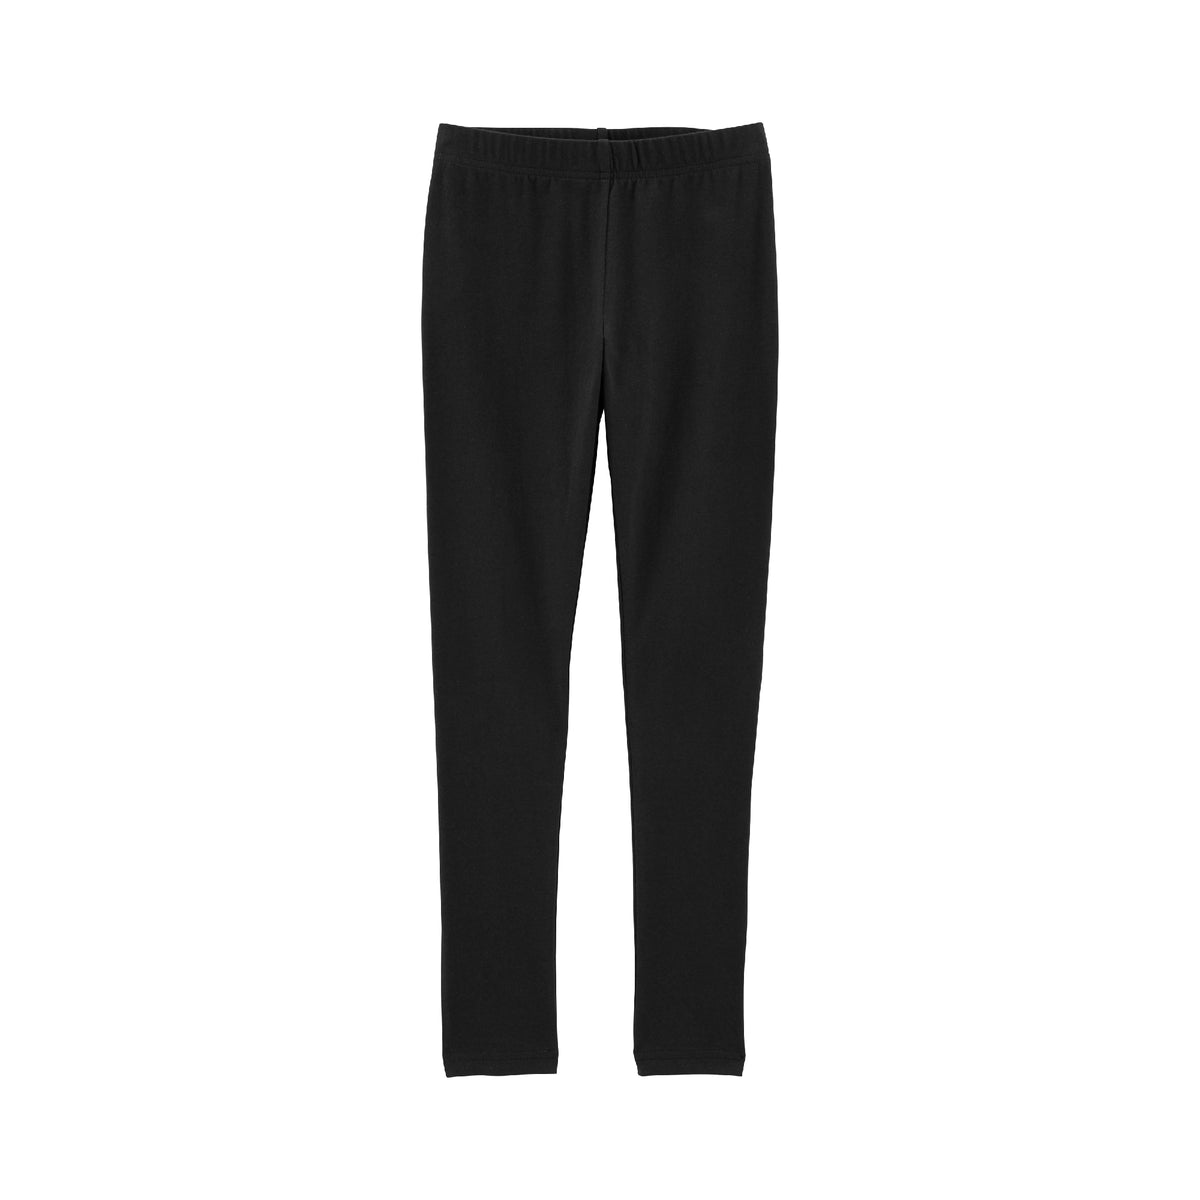 OshKosh black comfortable inner pants (5-8)